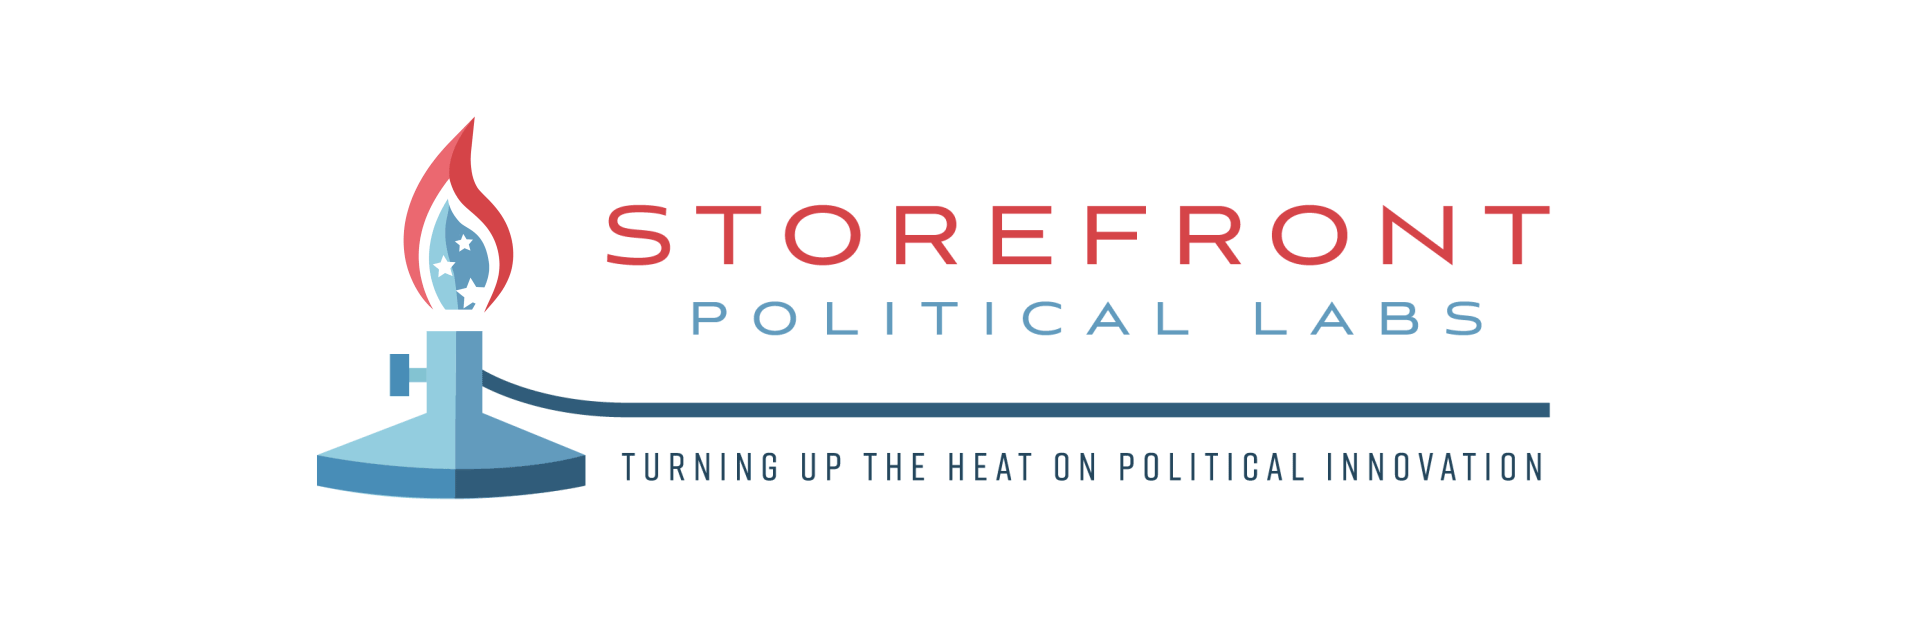 Storefront Political Labs Logo